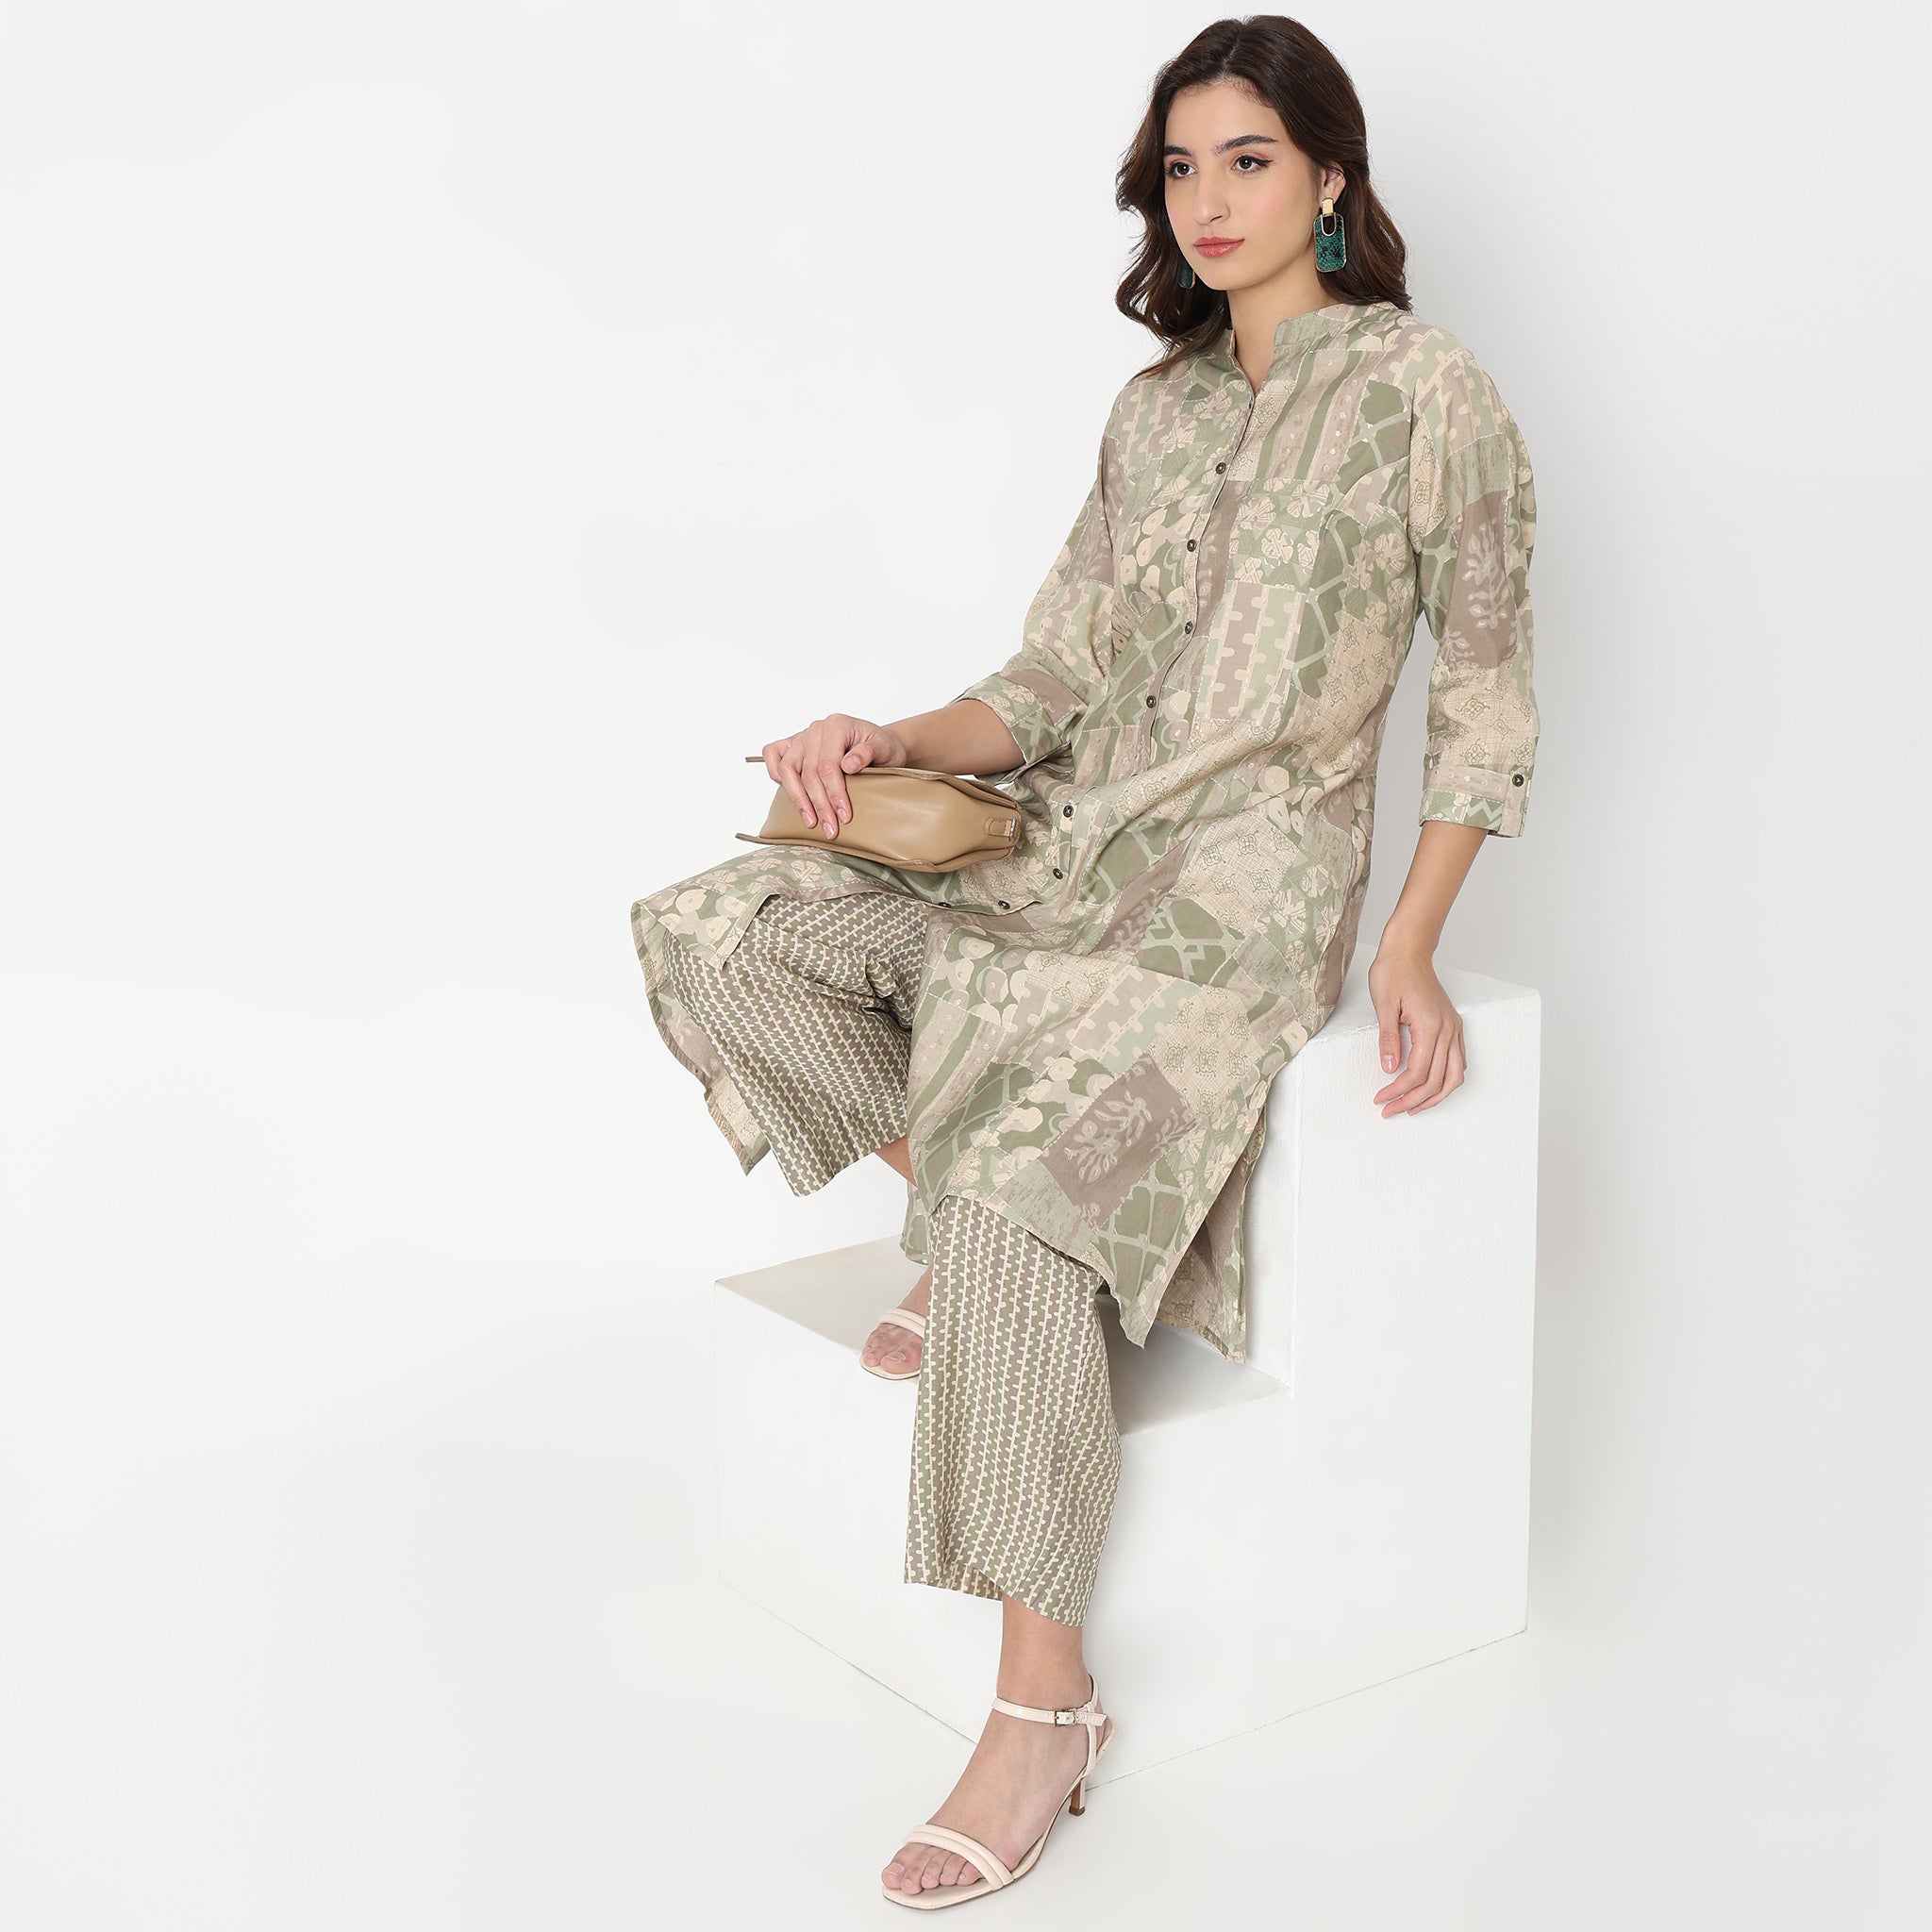 Myntra Cotton Kurti Sets and Dresses Haul 🤩 | Neema's Corner - YouTube